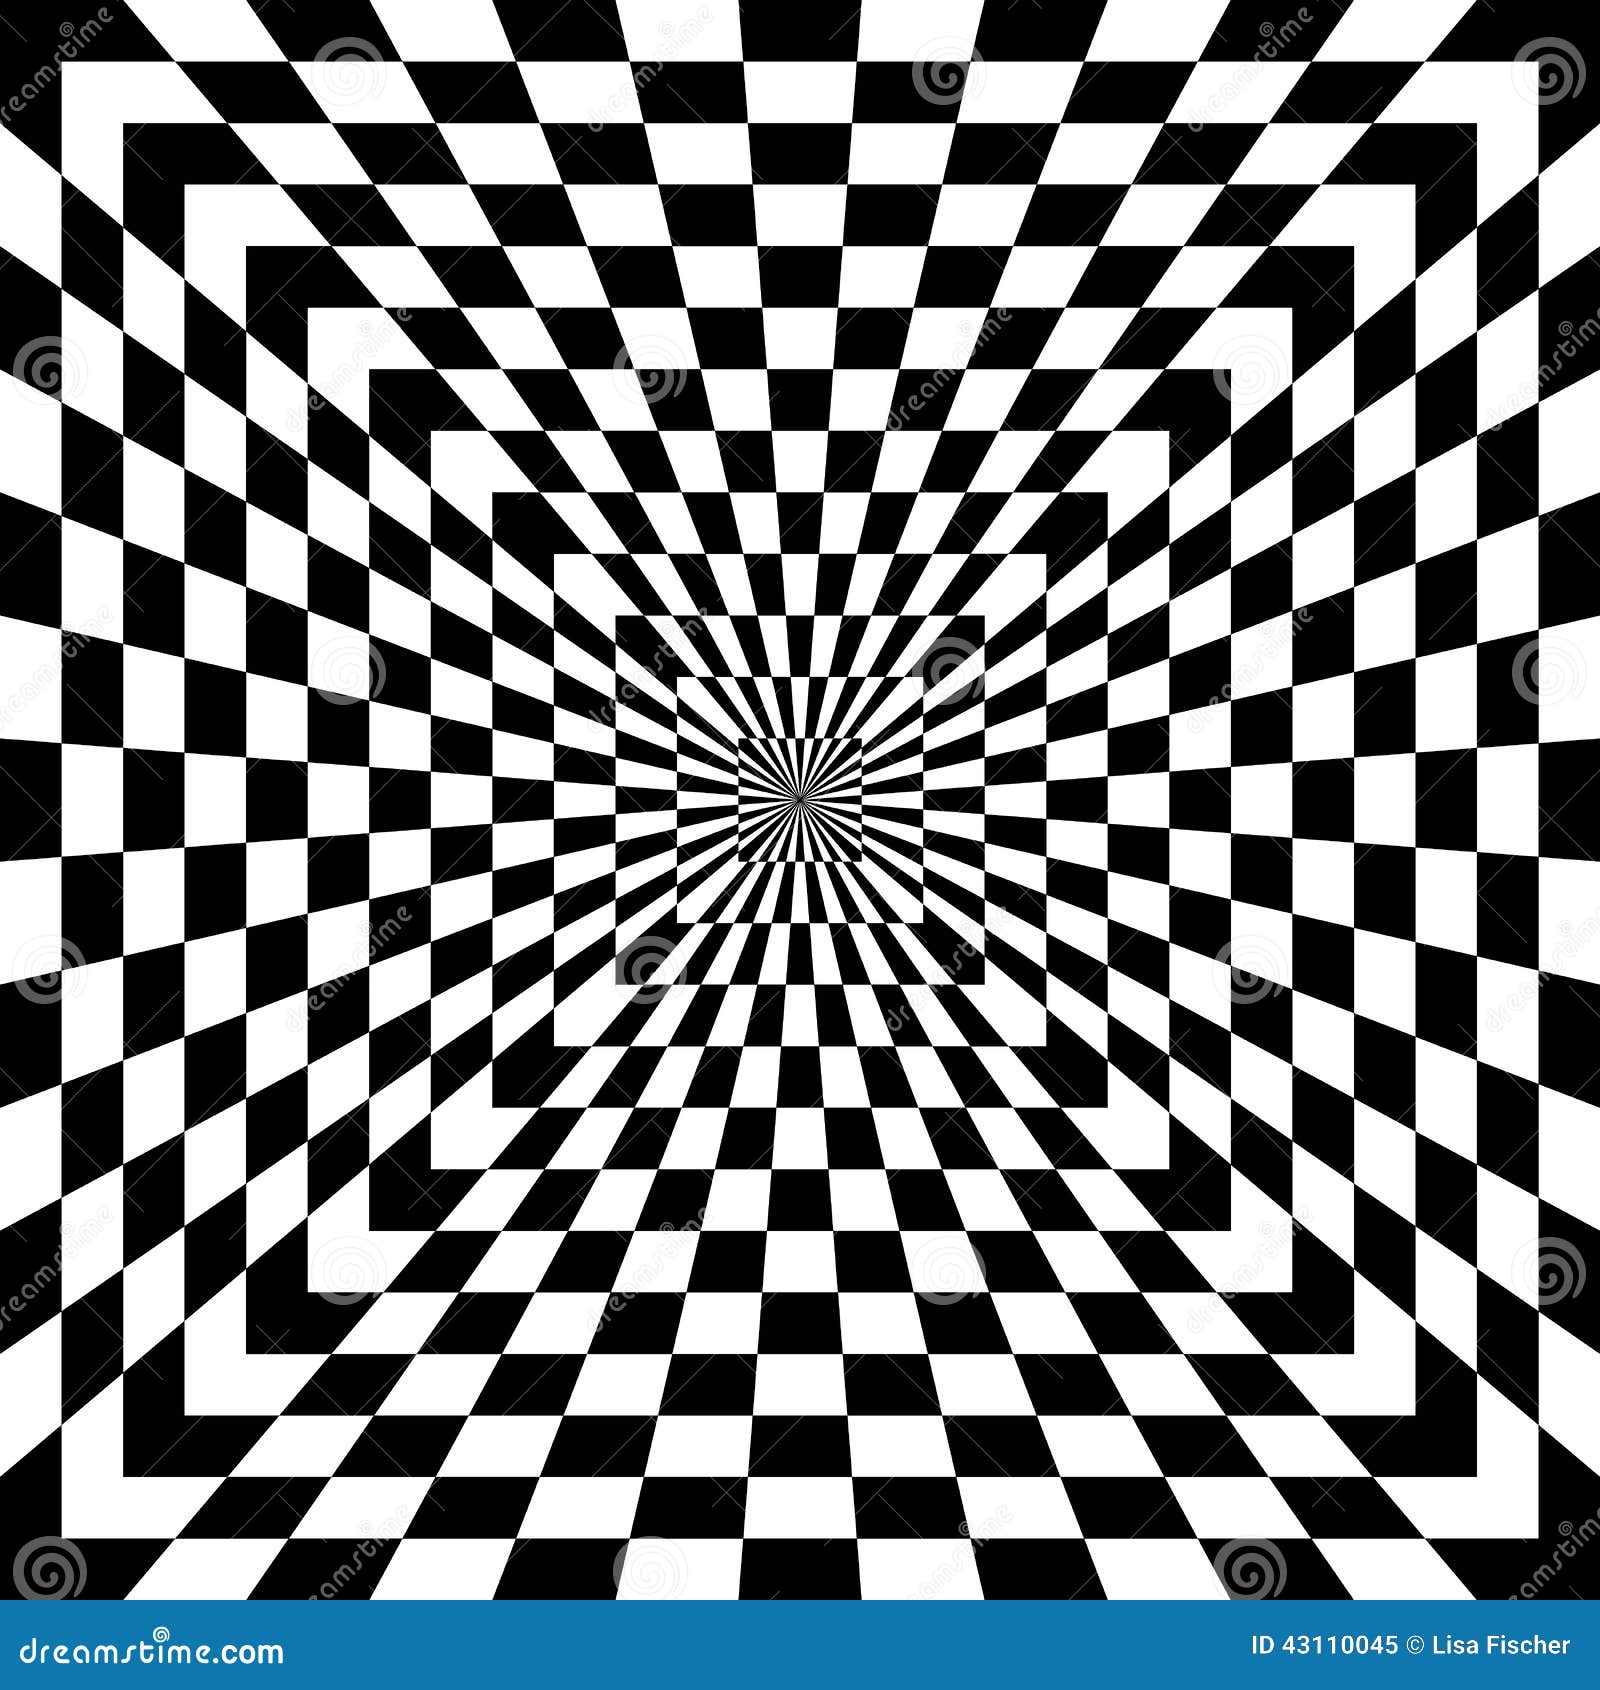 checkered optical illusion